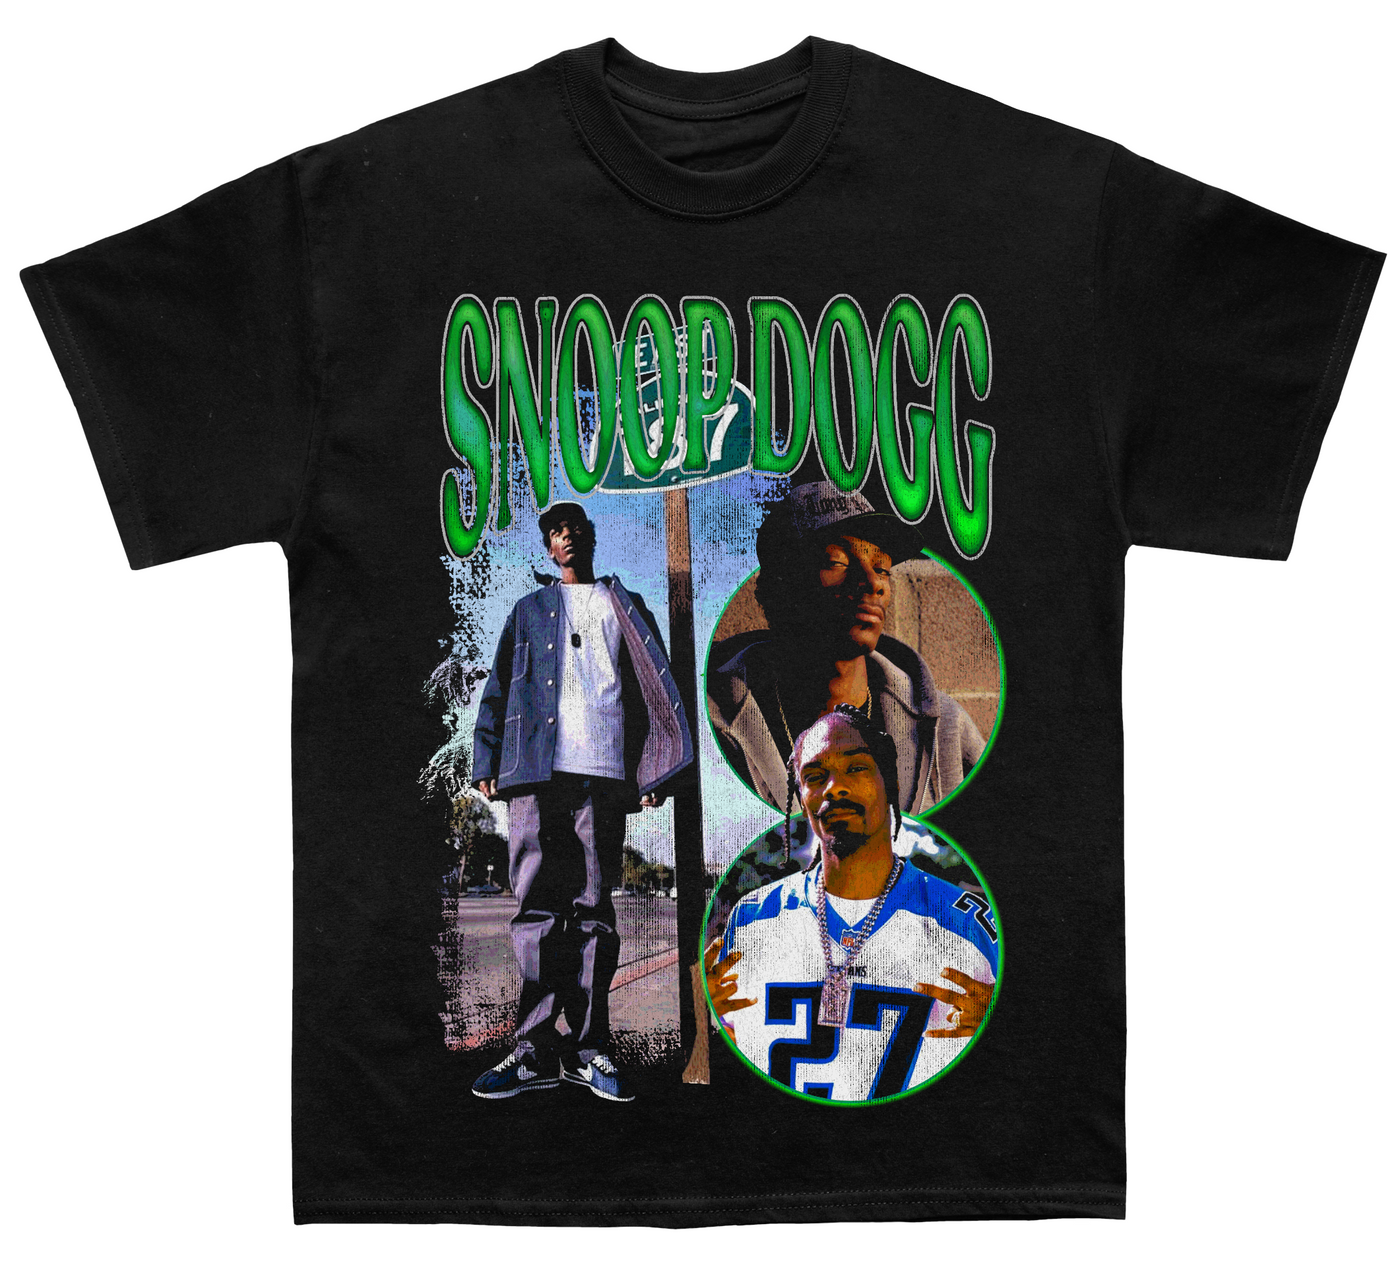 Snoop T-shirt